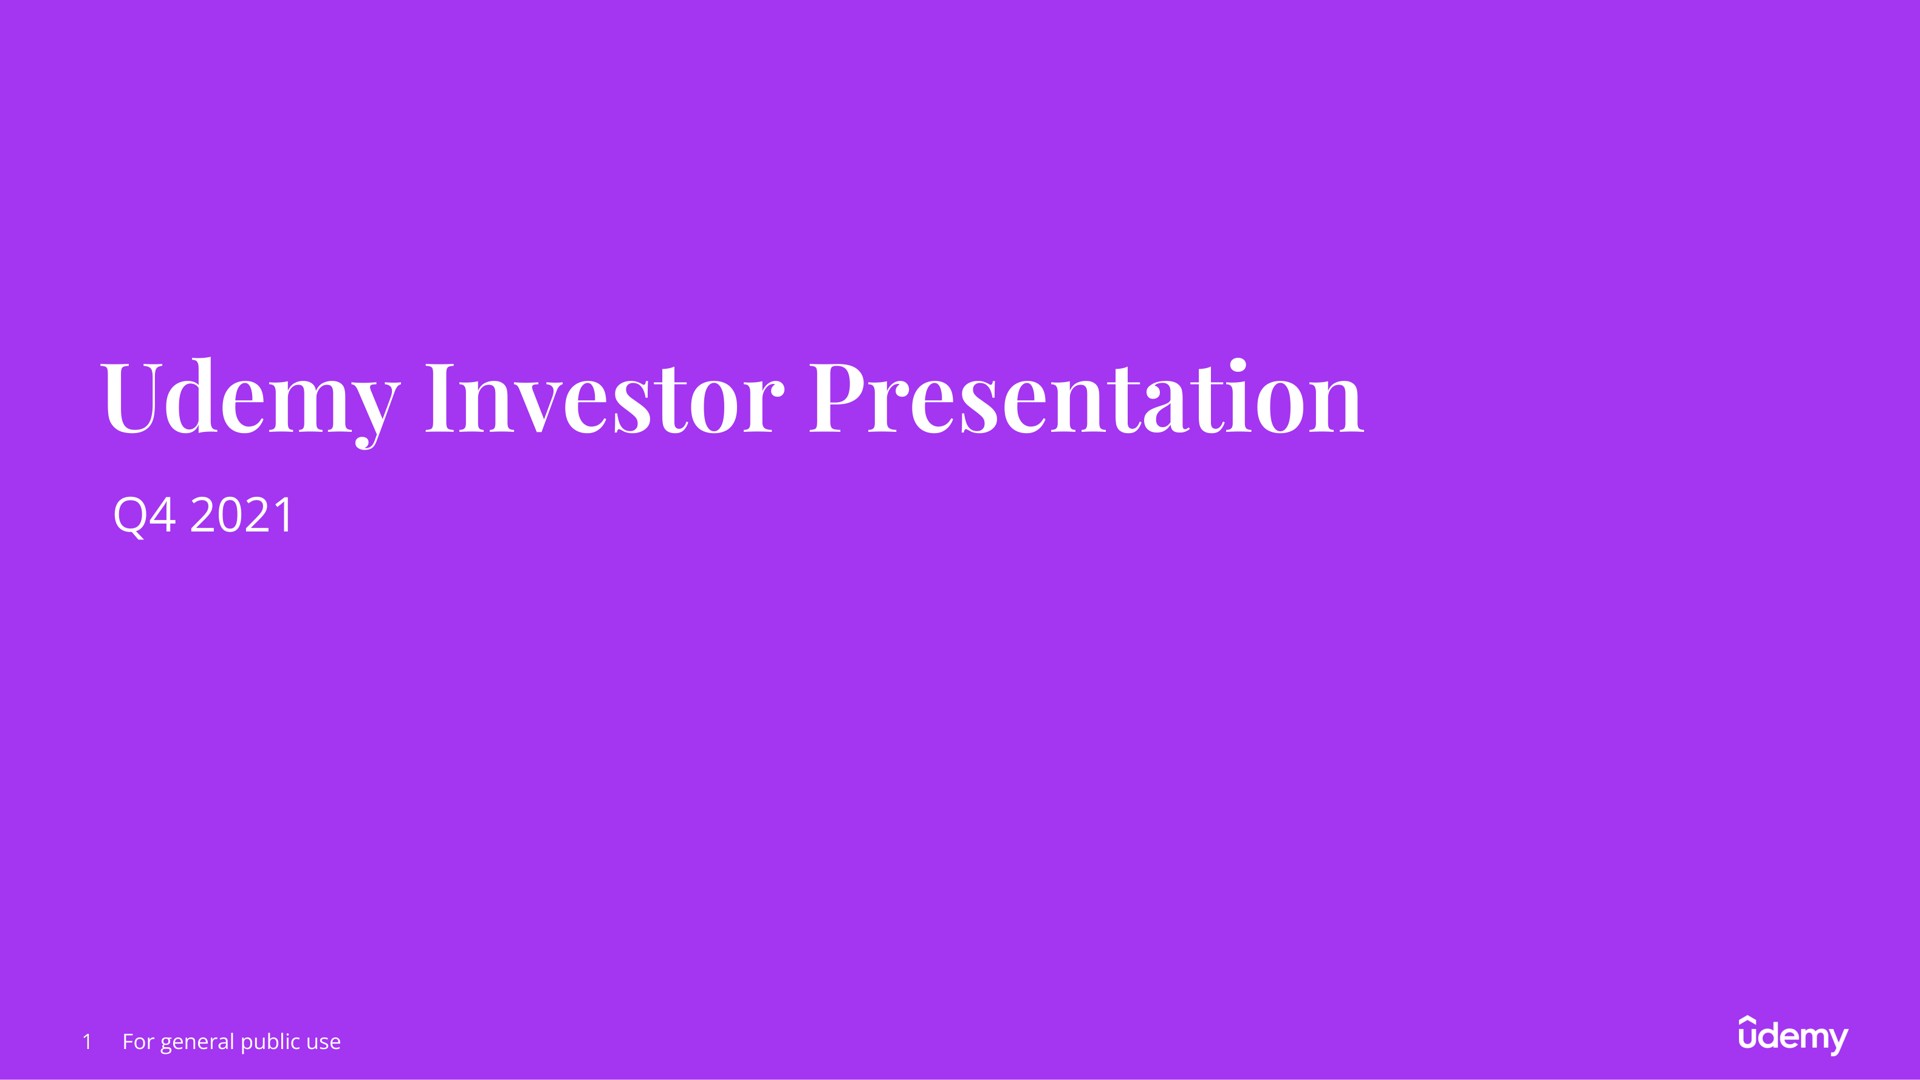 investor presentation | Udemy